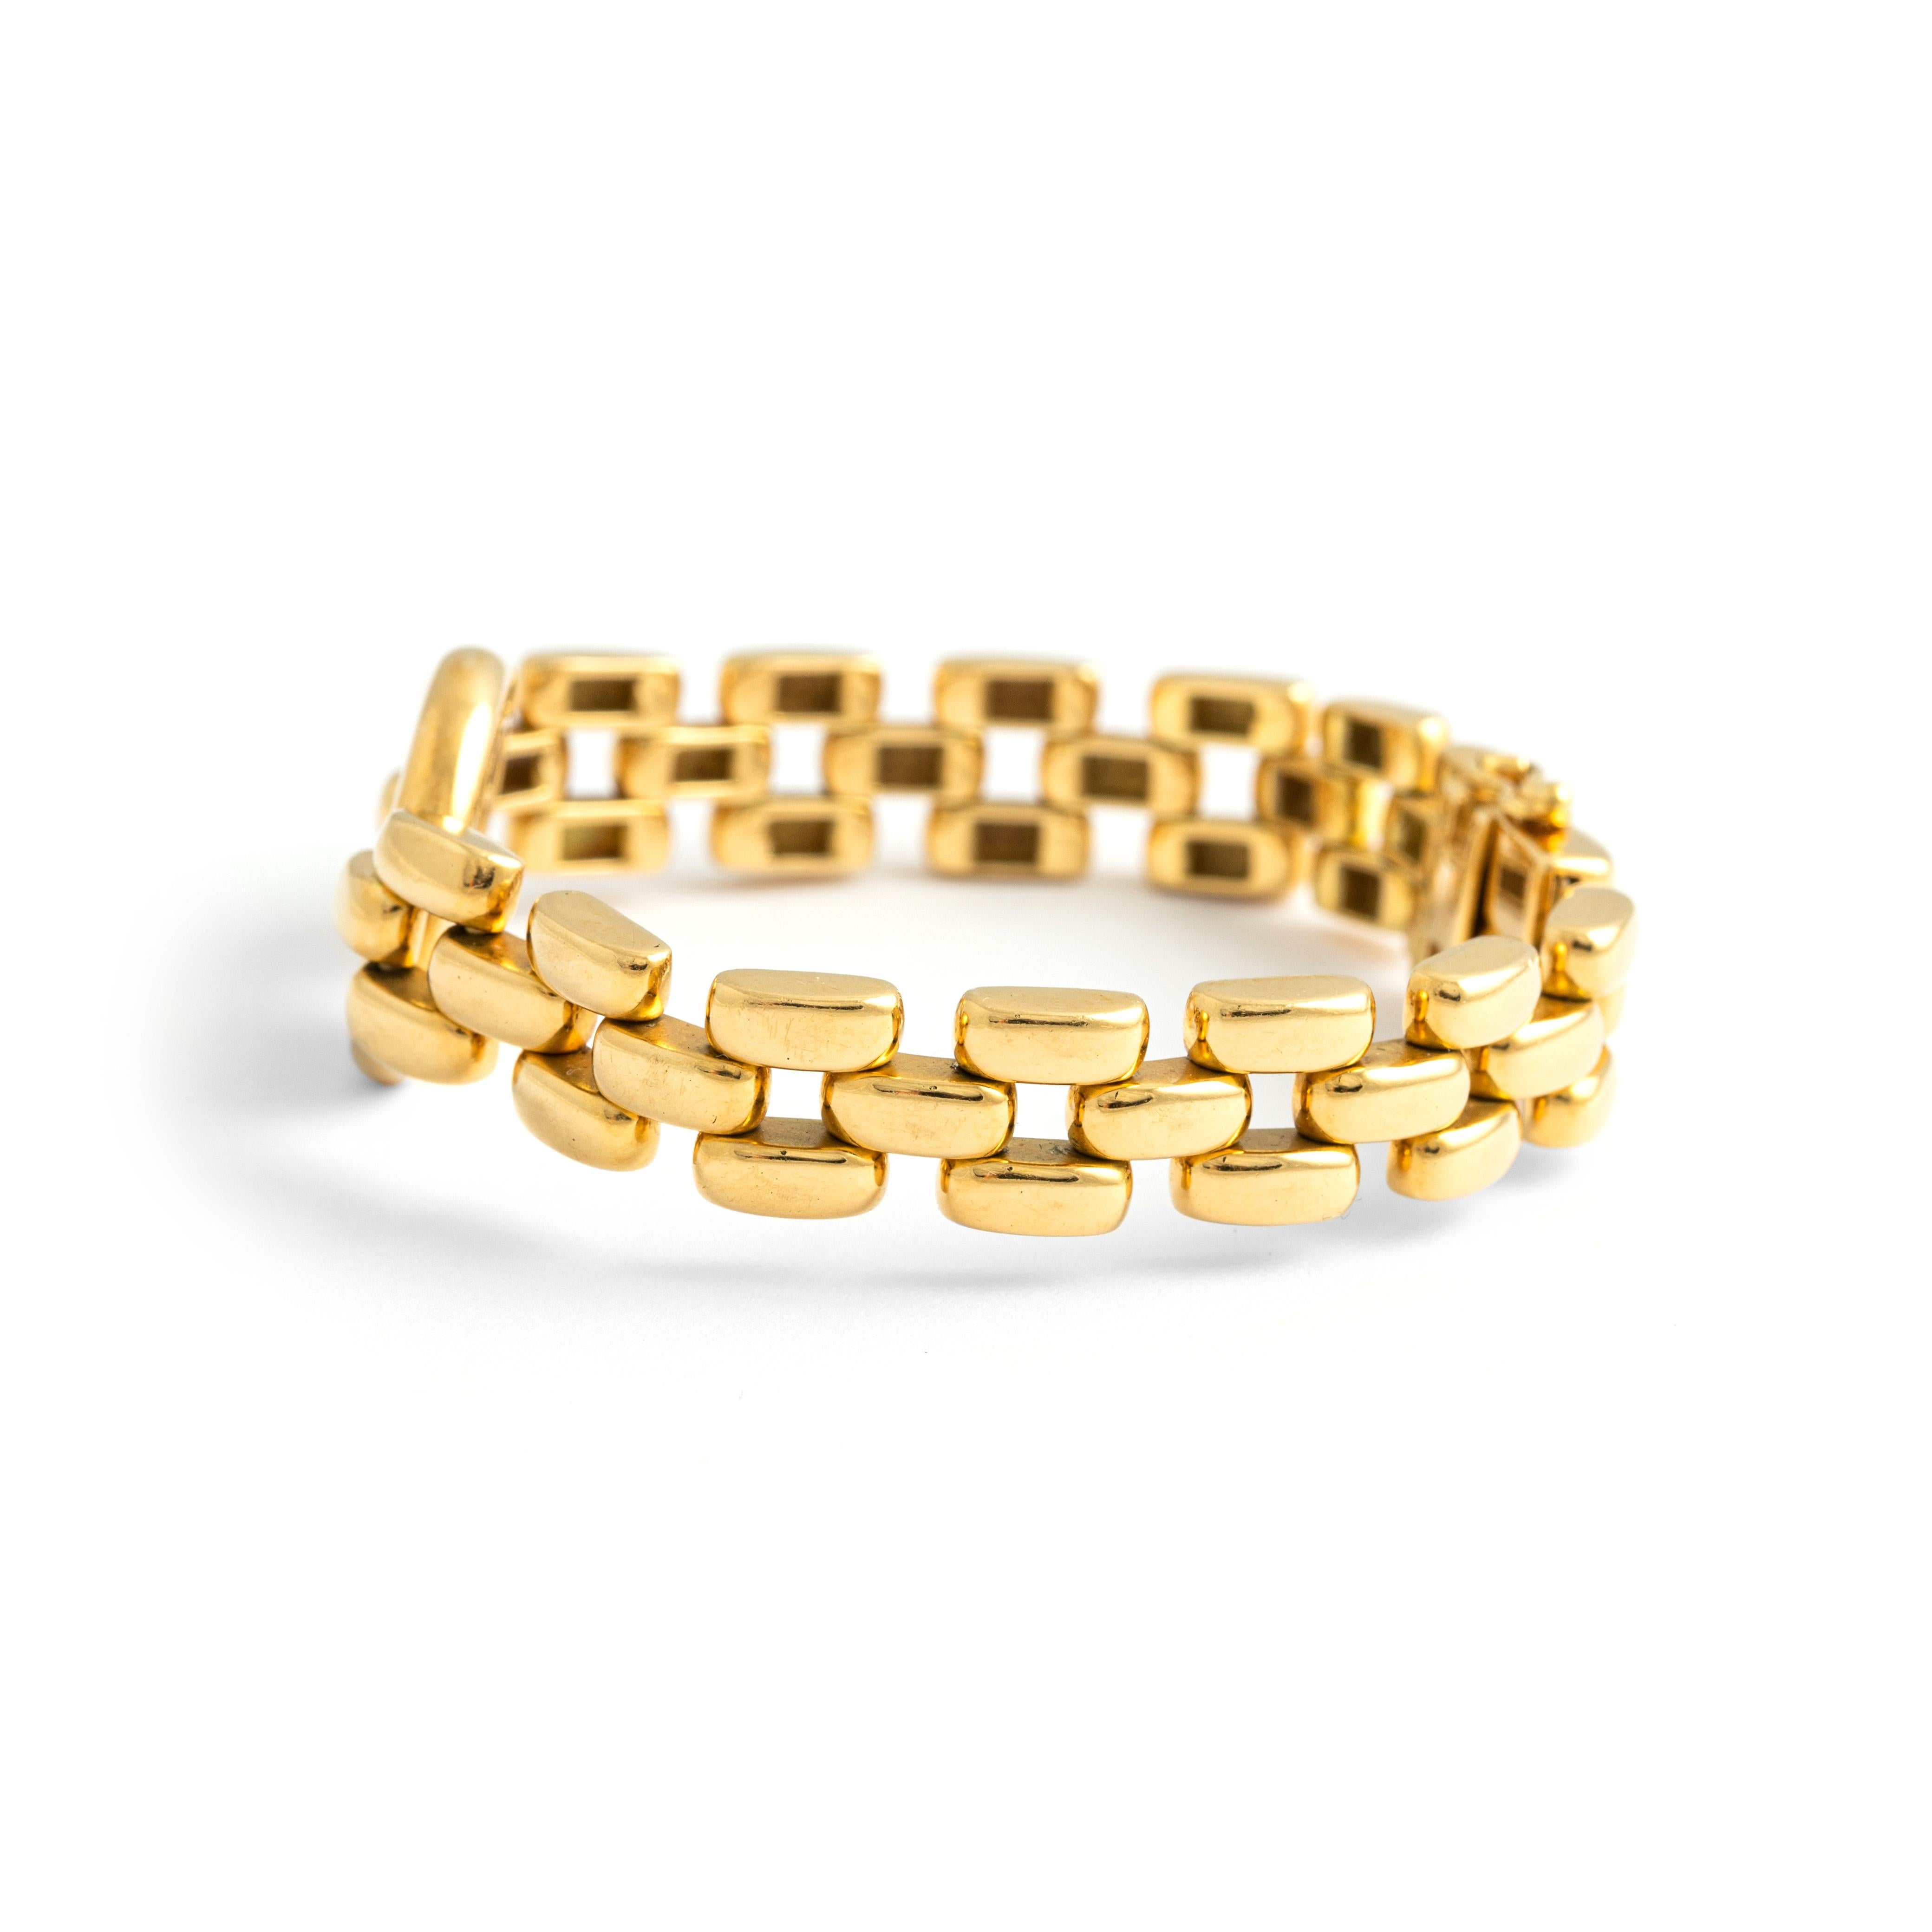 chopard bracelet price